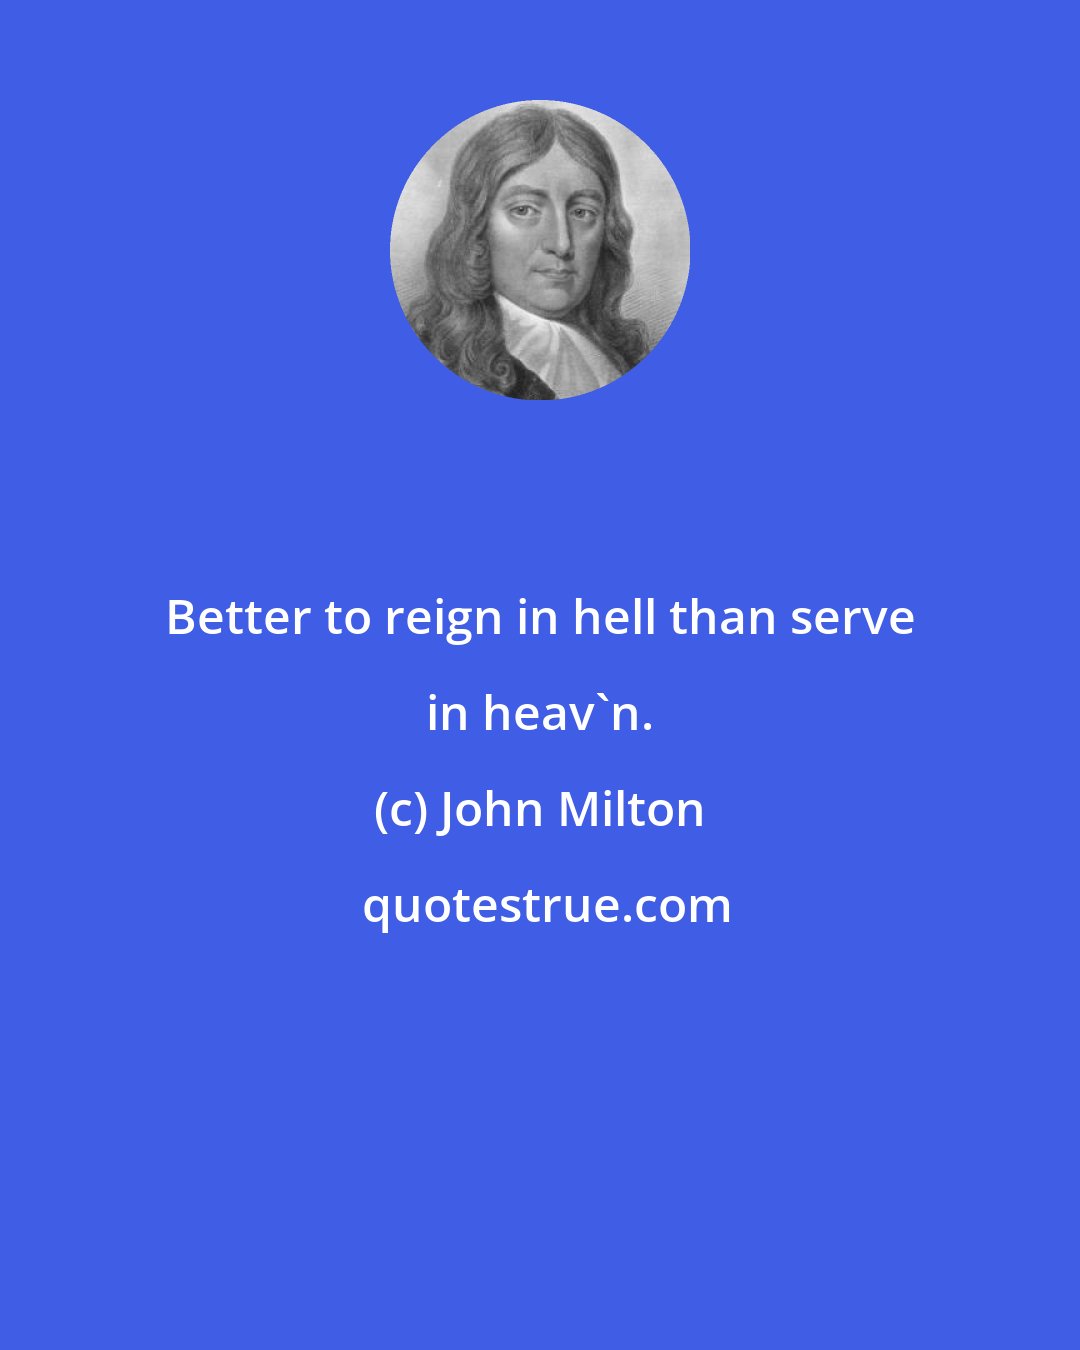 John Milton: Better to reign in hell than serve in heav'n.